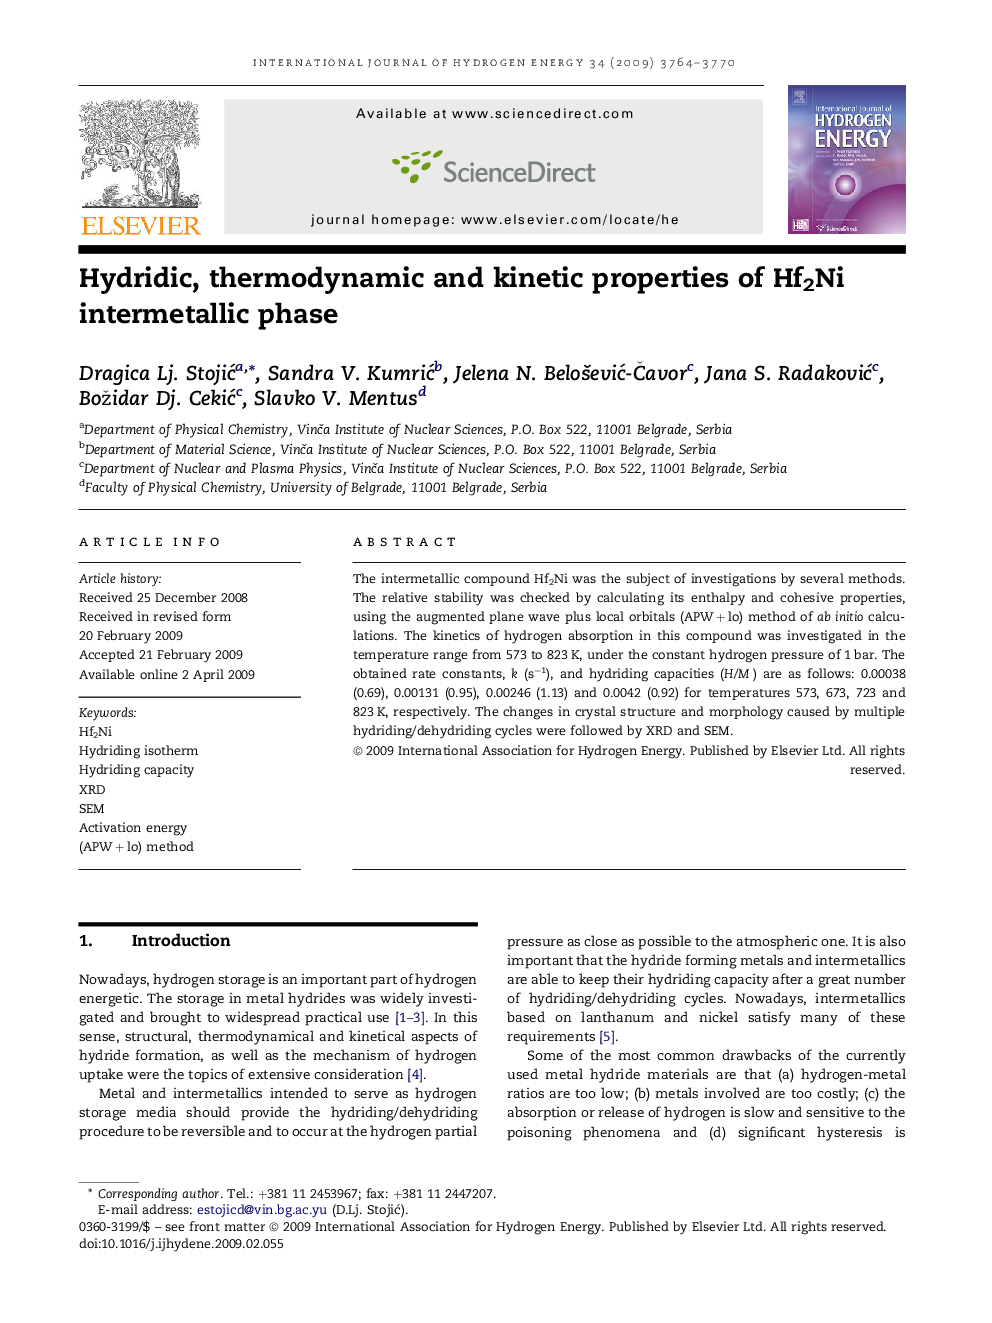 Hydridic, thermodynamic and kinetic properties of Hf2Ni intermetallic phase